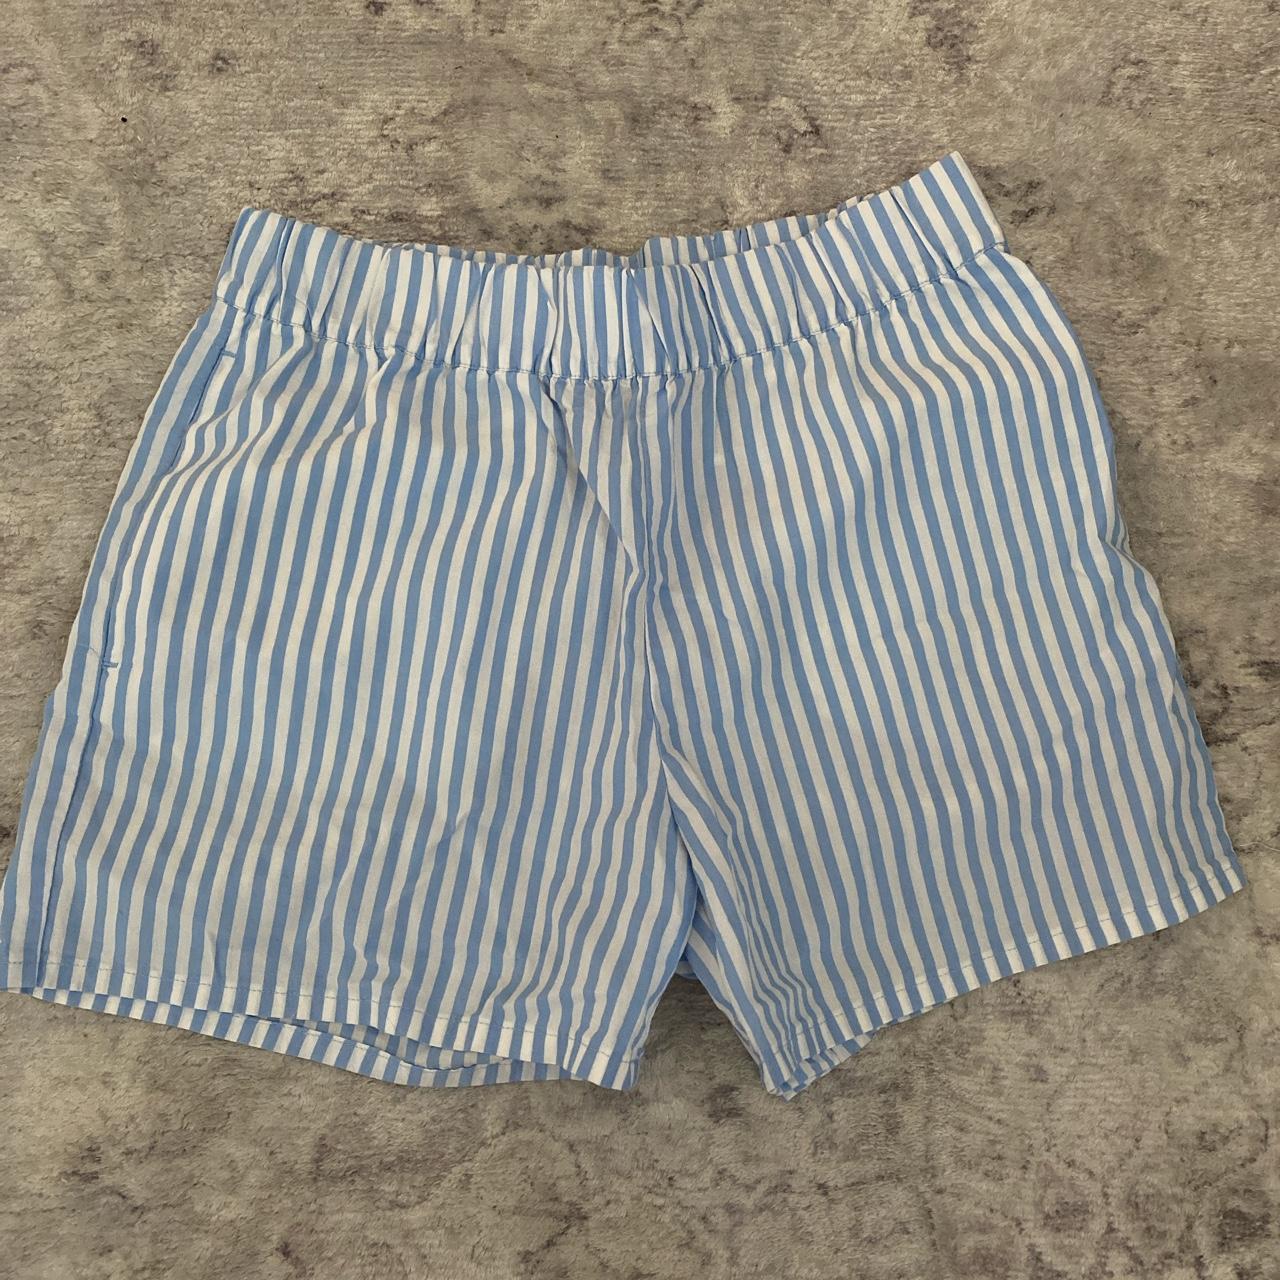 djerf breezy striped blue shorts super cute blue... - Depop